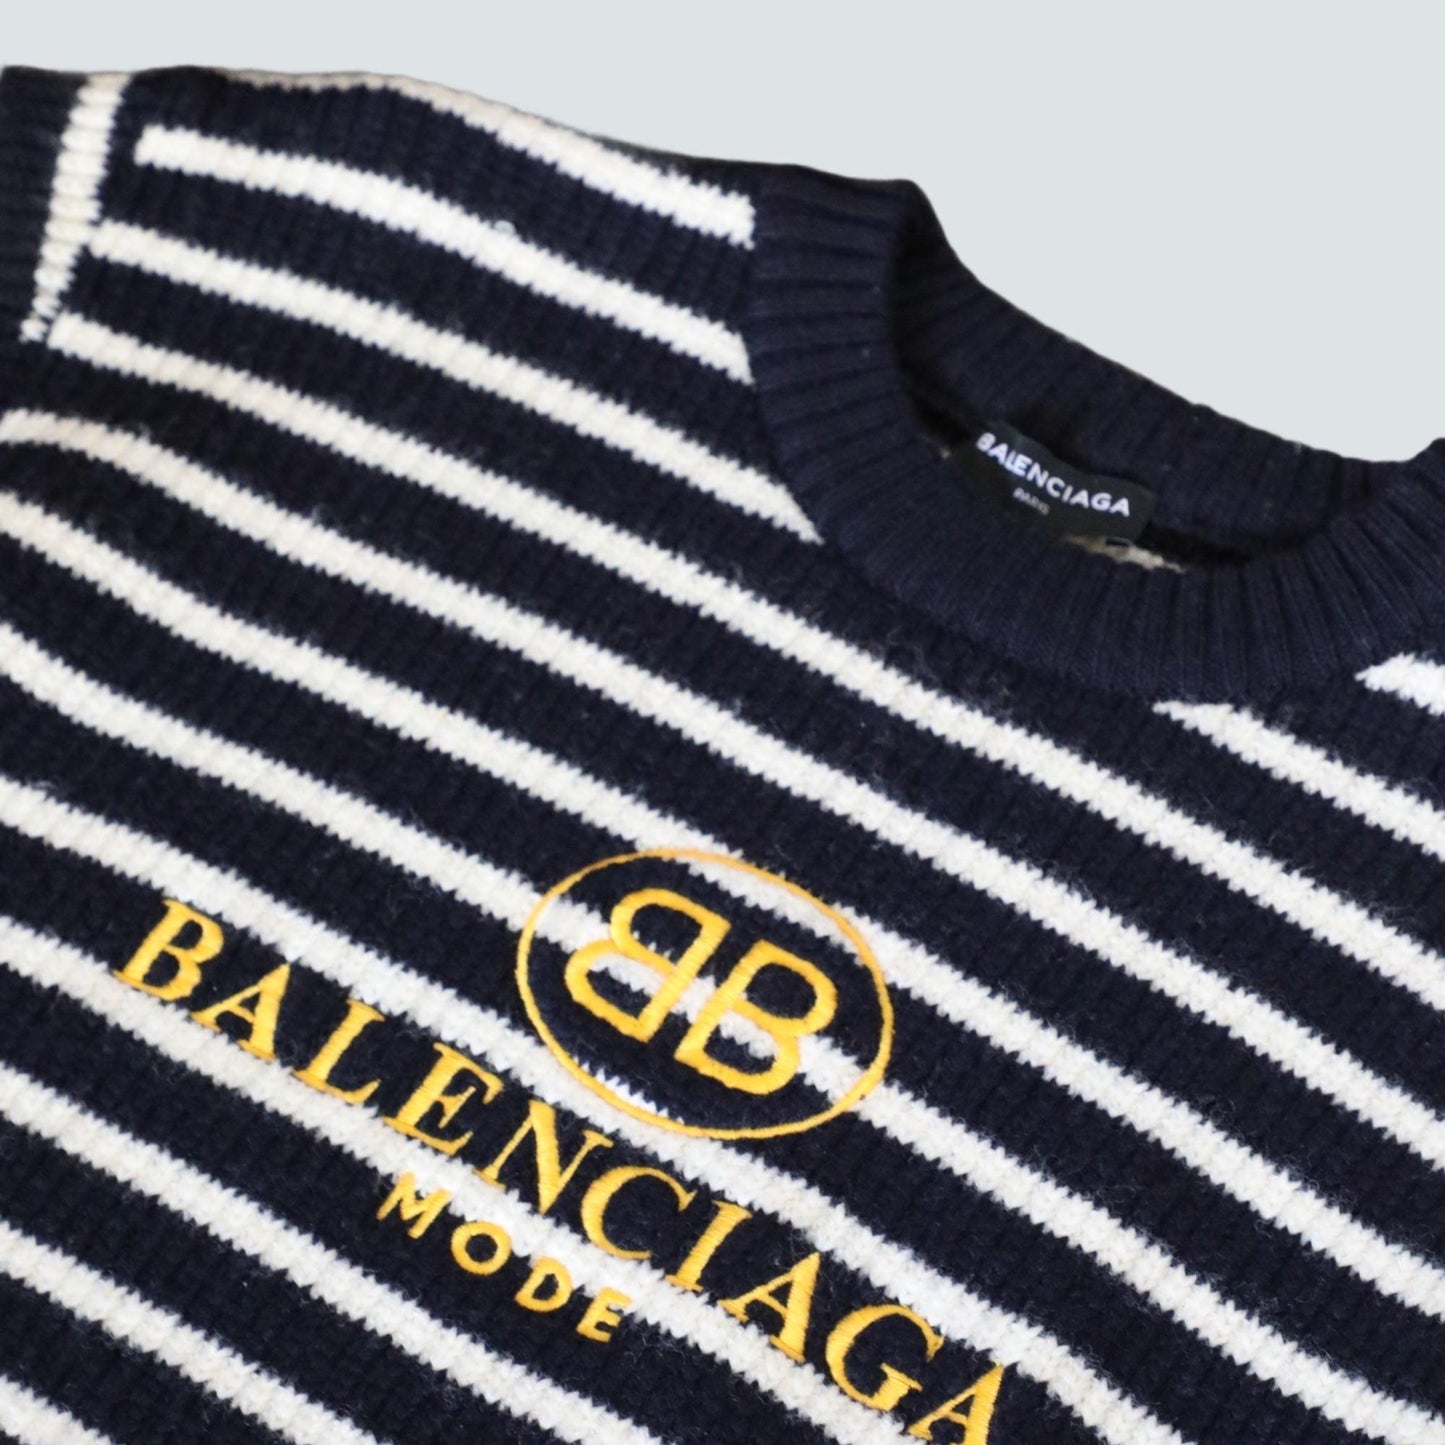 Balenciaga Striped Knitwear jumper (M) - Known Source